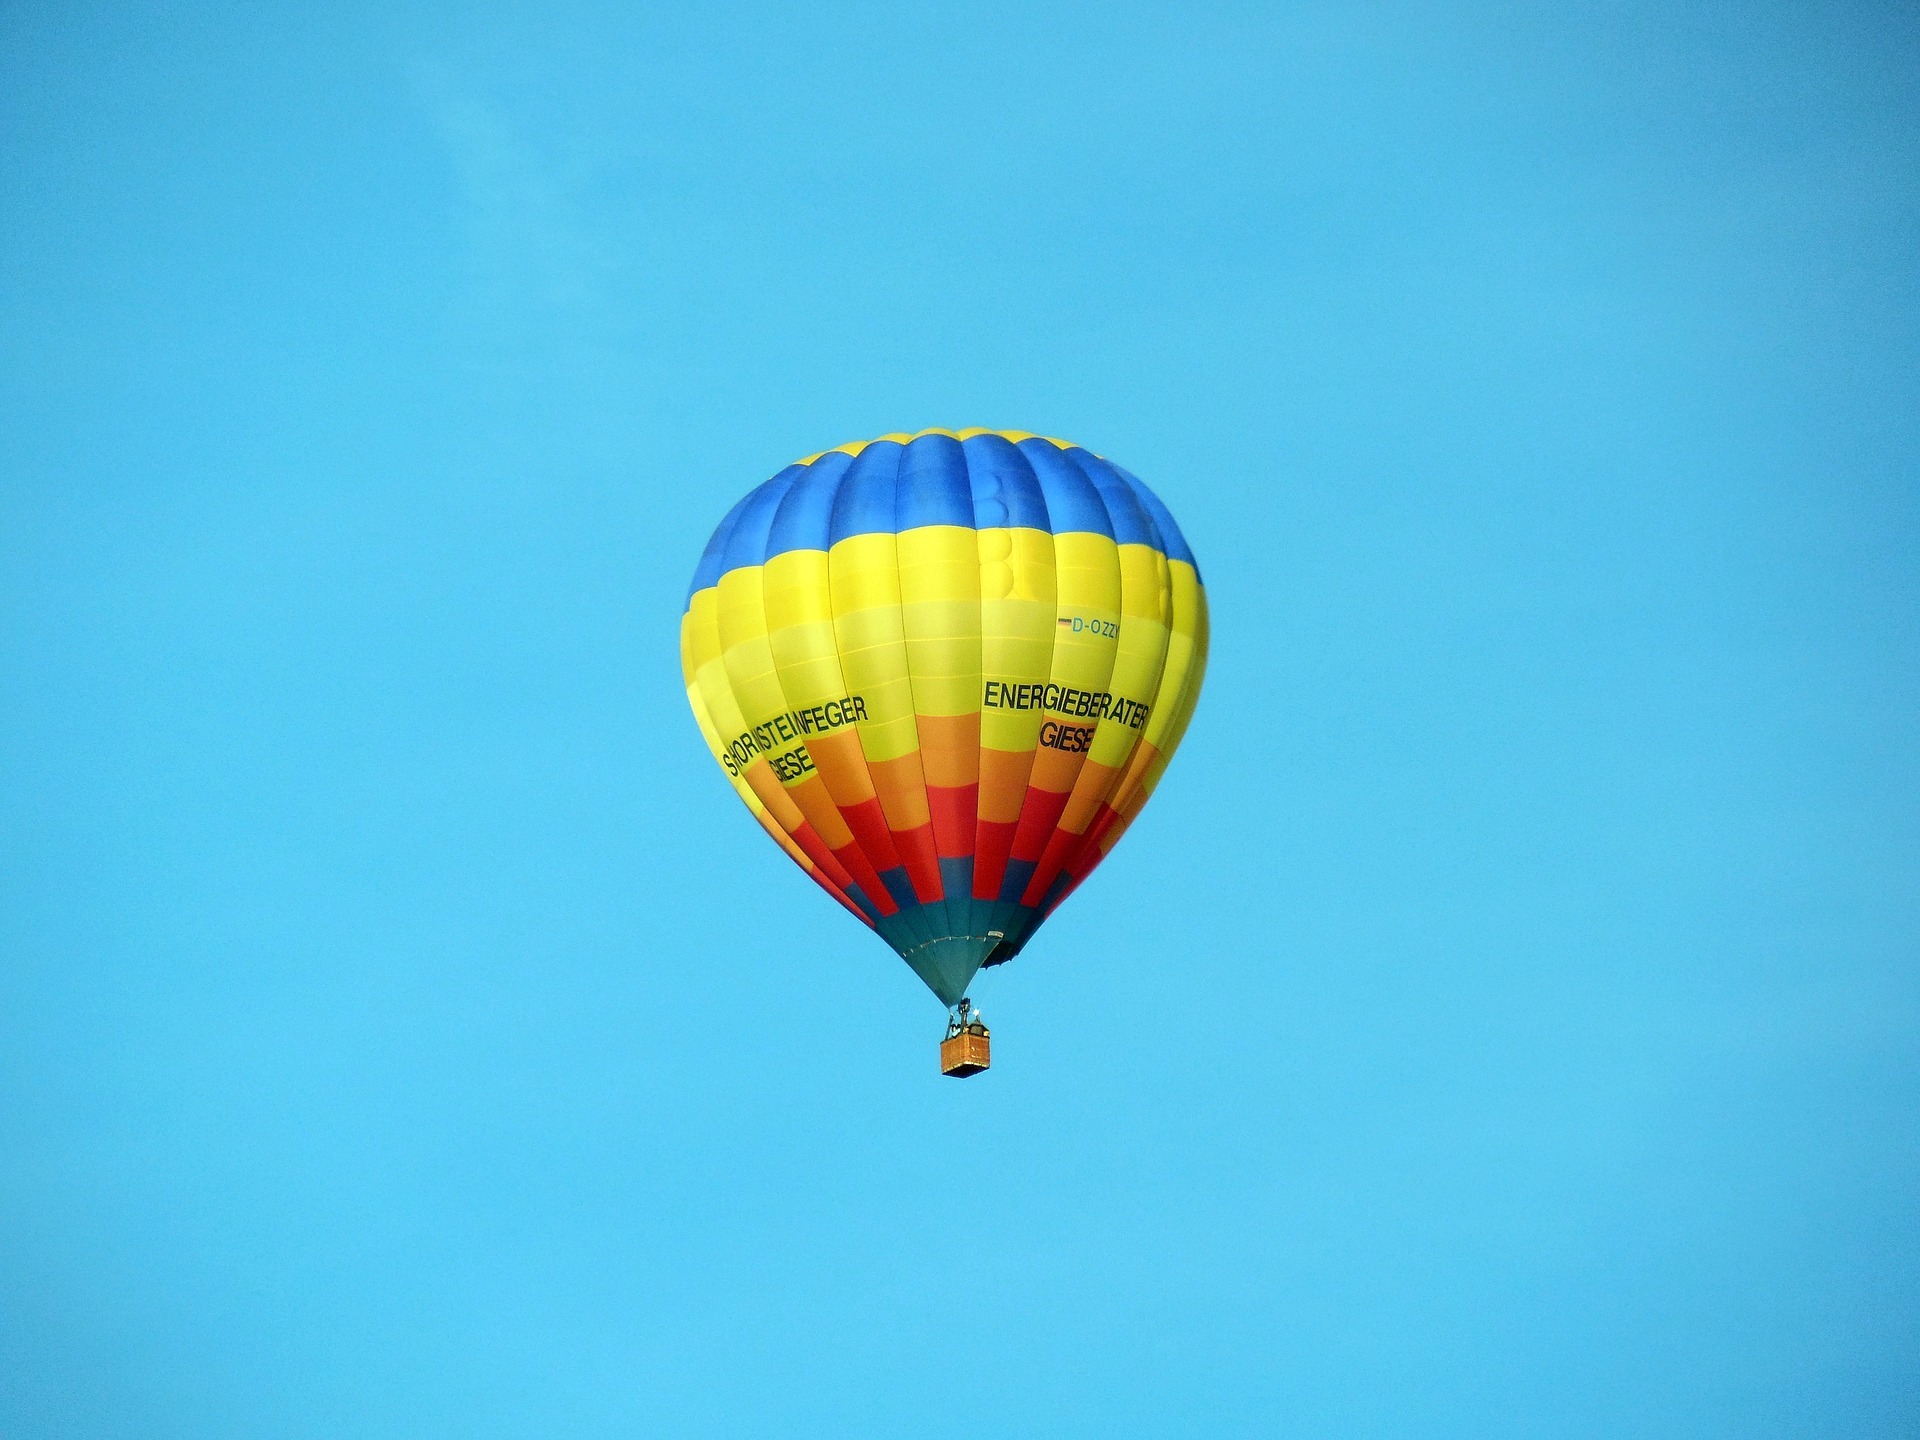 Ballonfahrt Mecklenburg-Vorpommern, Heißluftballon am Himmel